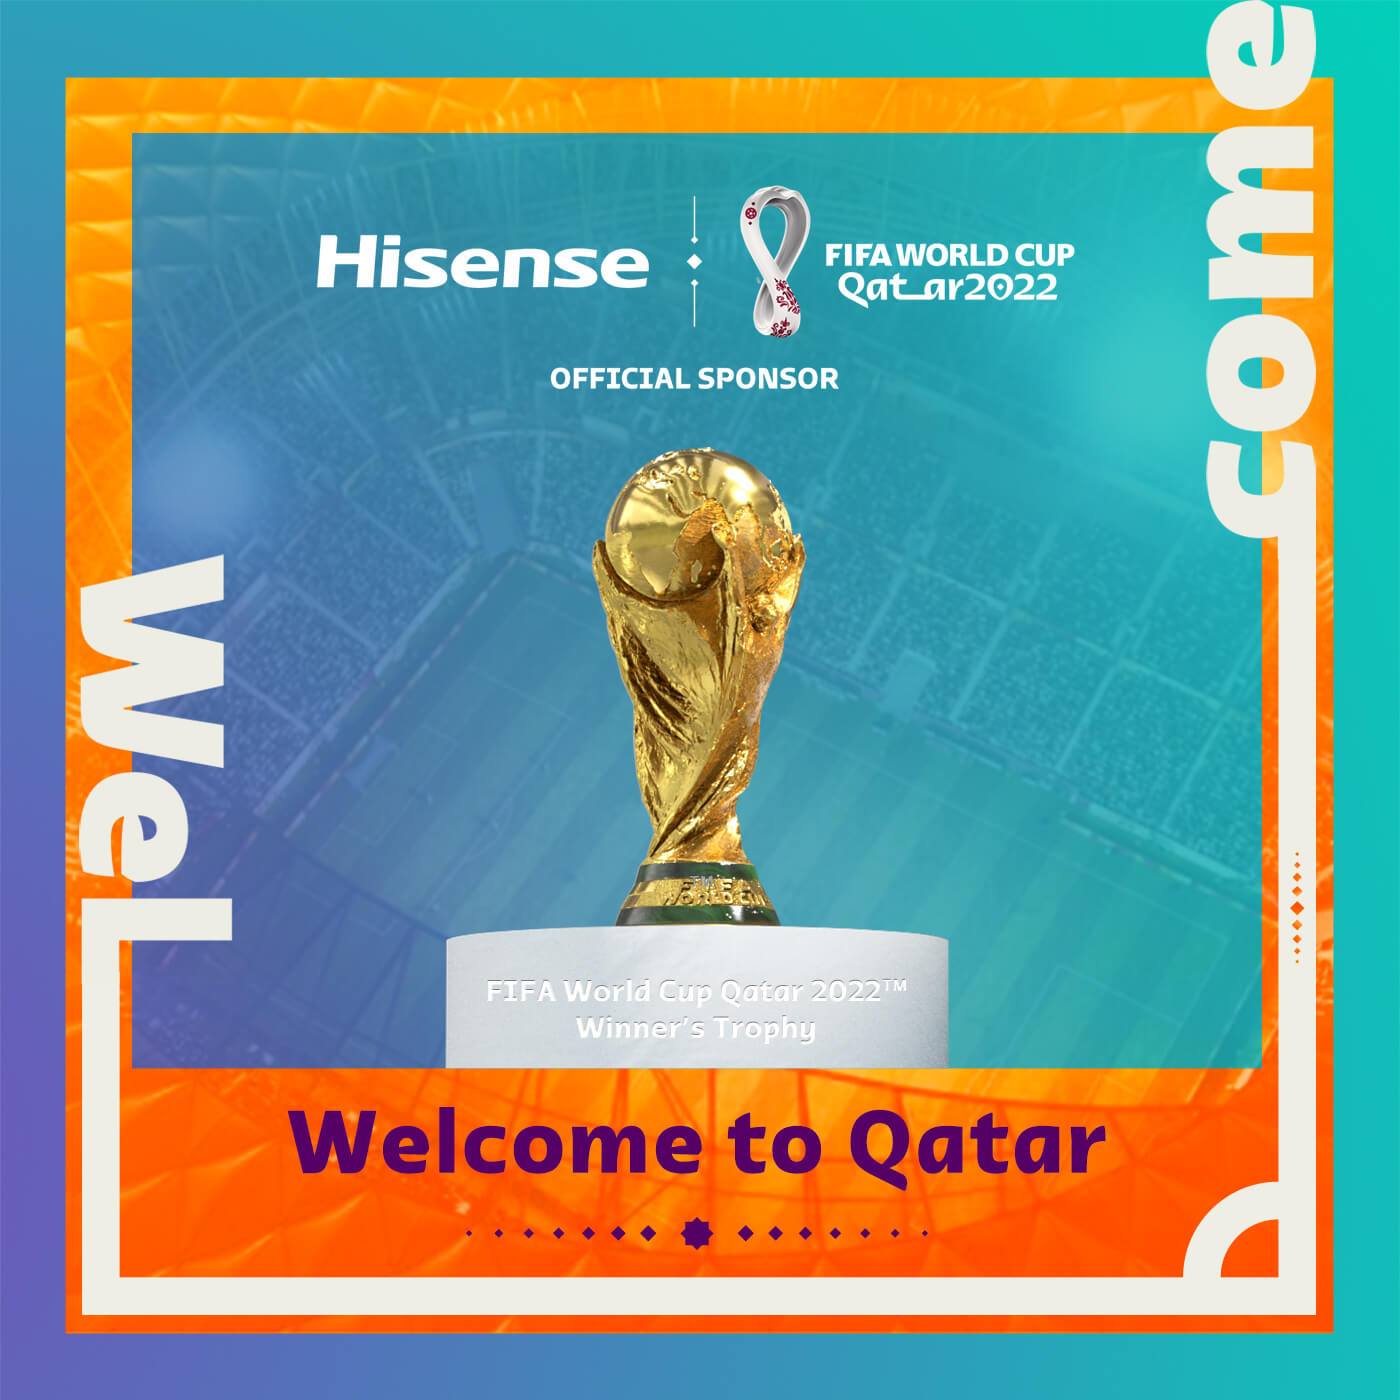 Hisense Official Sponsor Of FIFA World Cup Qatar 2022™